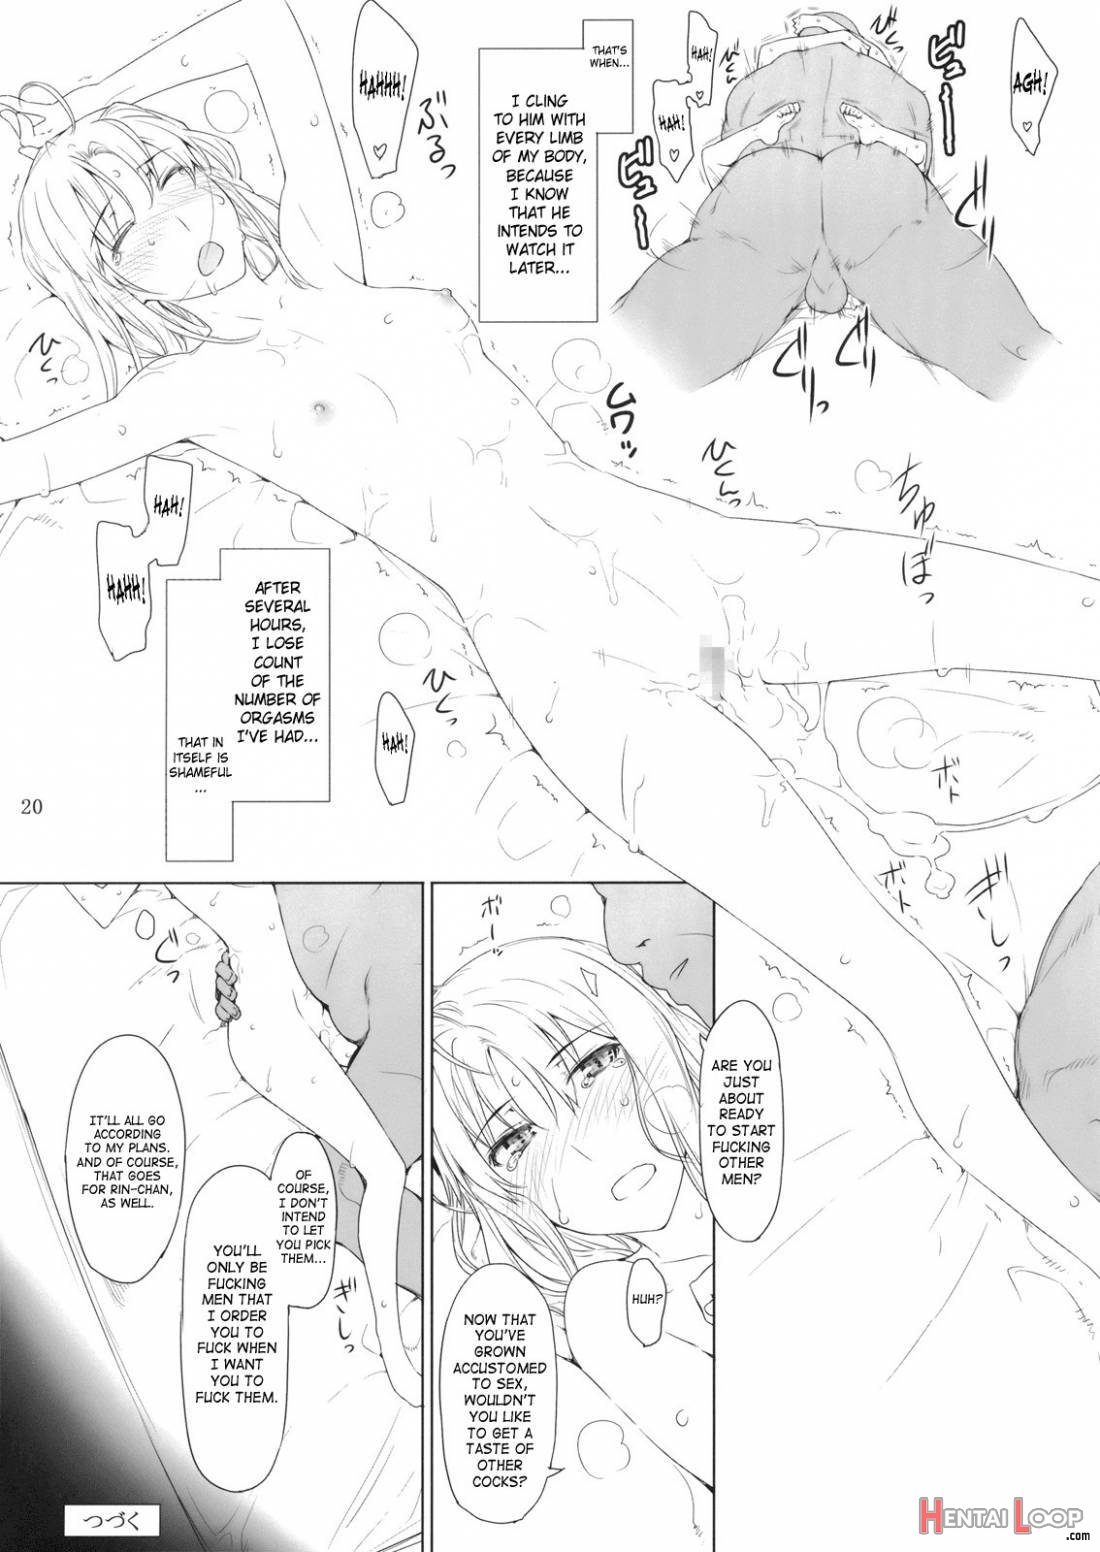 Tohsaka-ke no Kakei Jijou 9 page 19